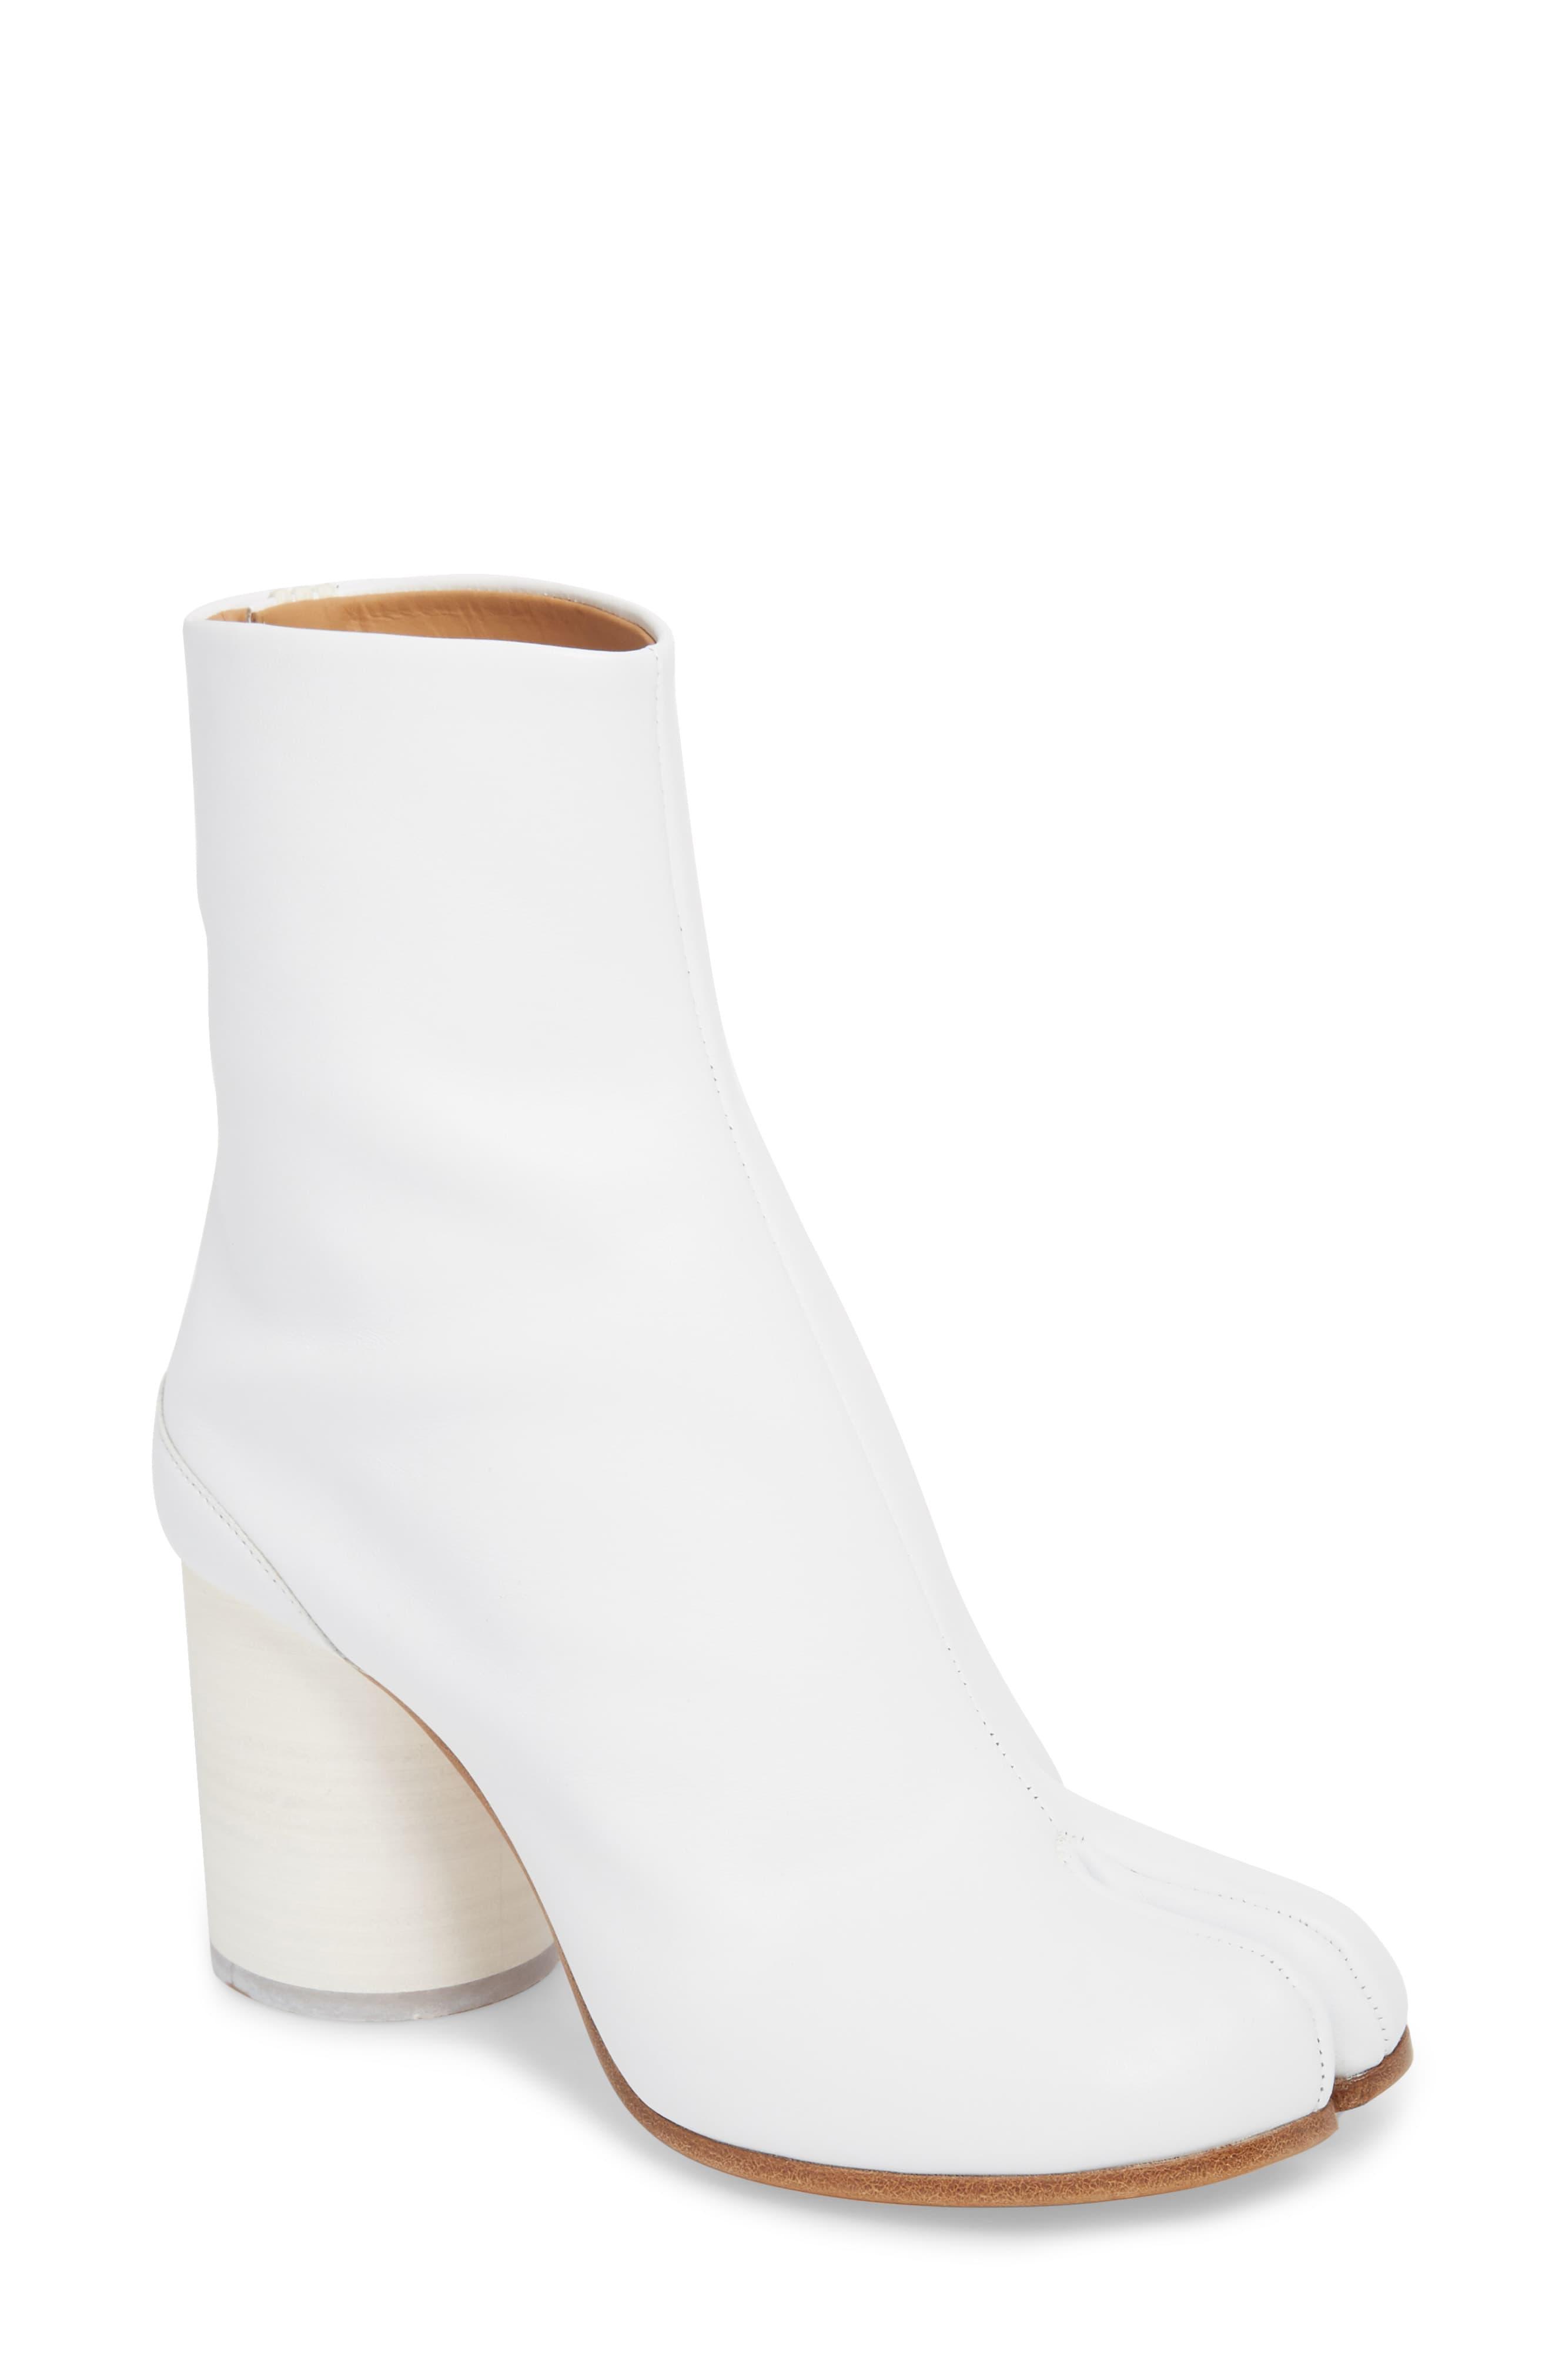 Maison Margiela Leather Tabi Boot in White - Lyst